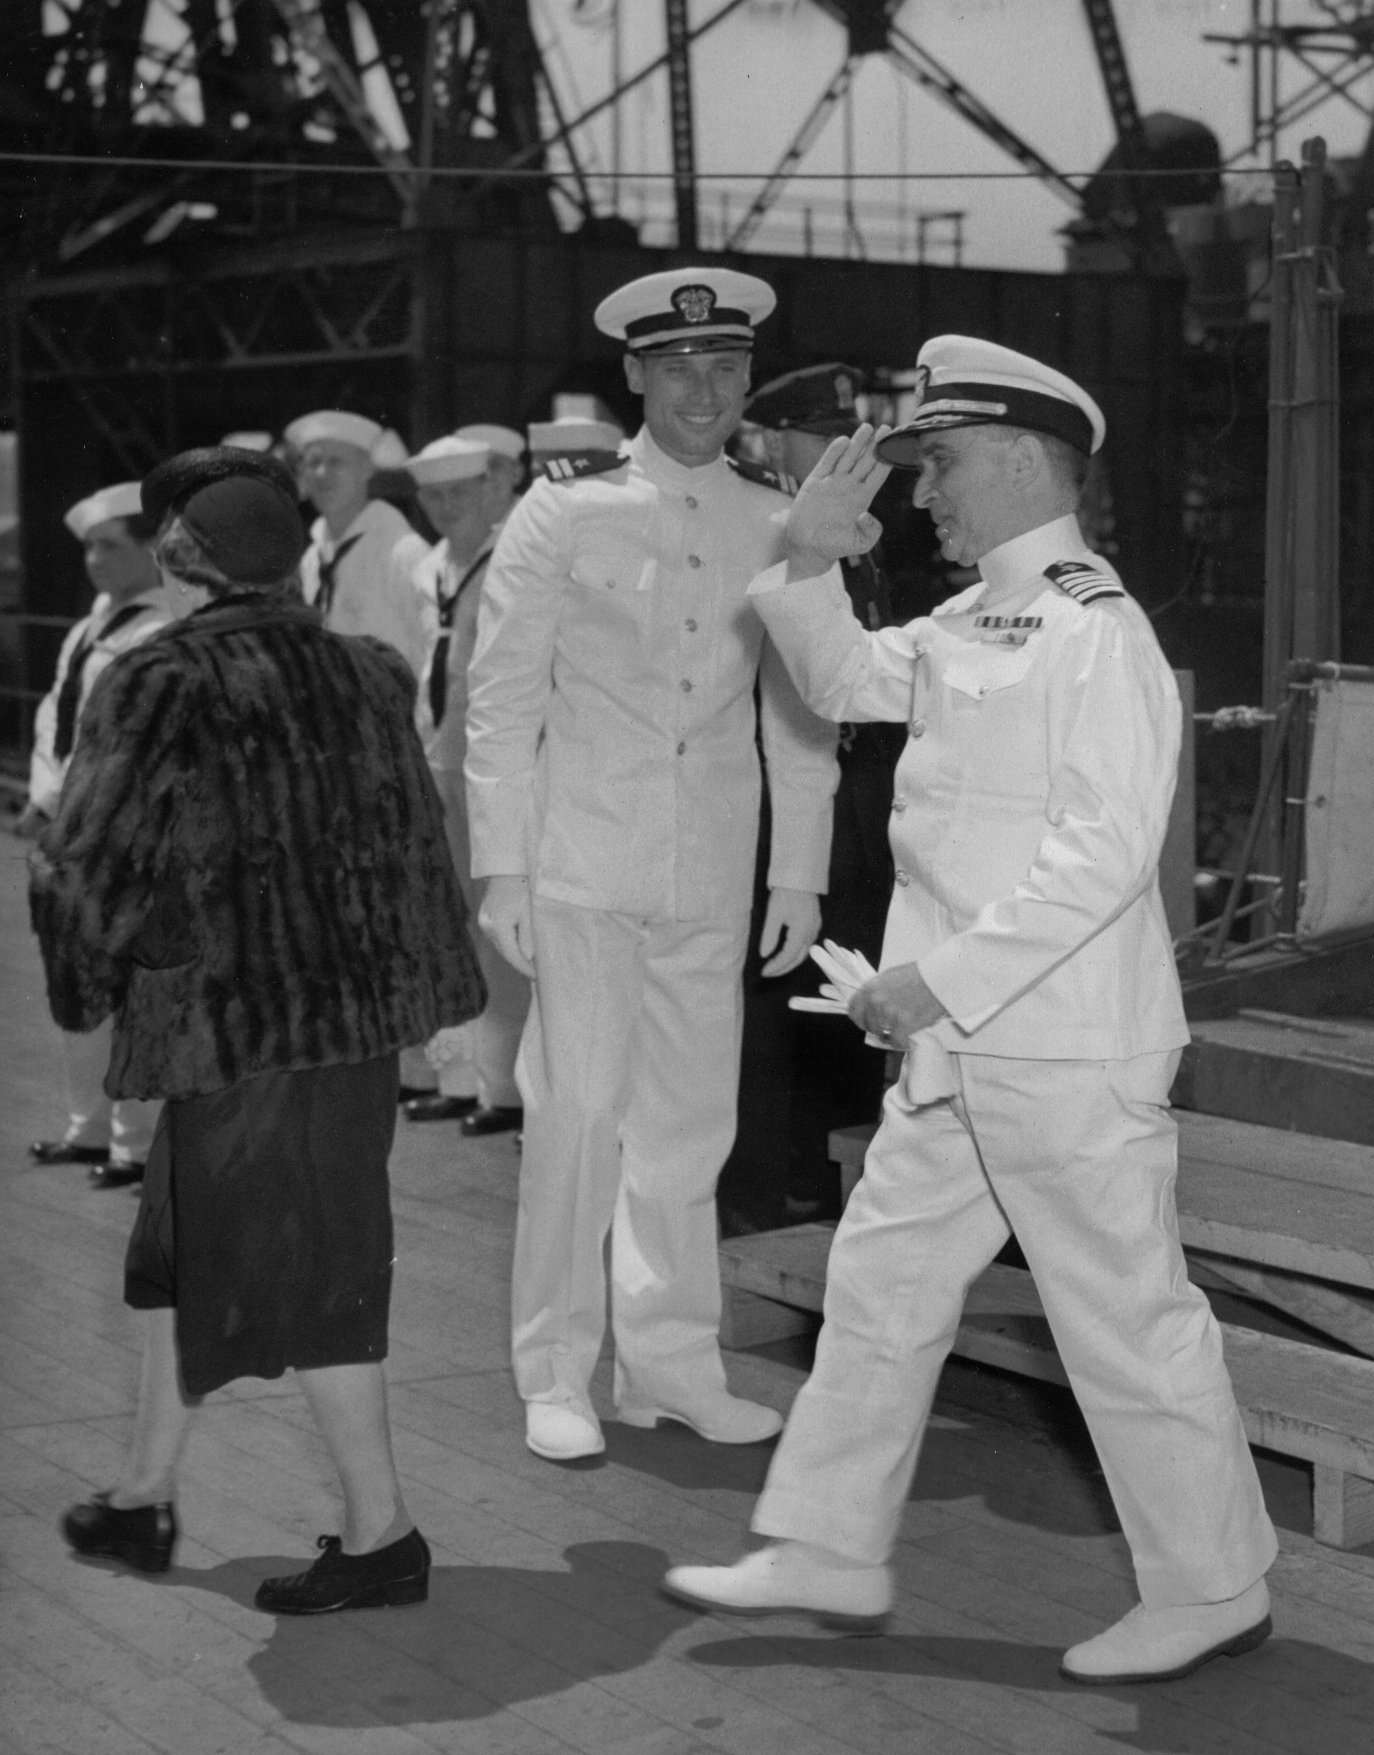 Commissioning ceremony of USS New Jersey, Philadelphia Navy Yard, Pennsylvania, United States, 23 May 1943, photo 10 of 25; note roommate of Robert Elliott on left